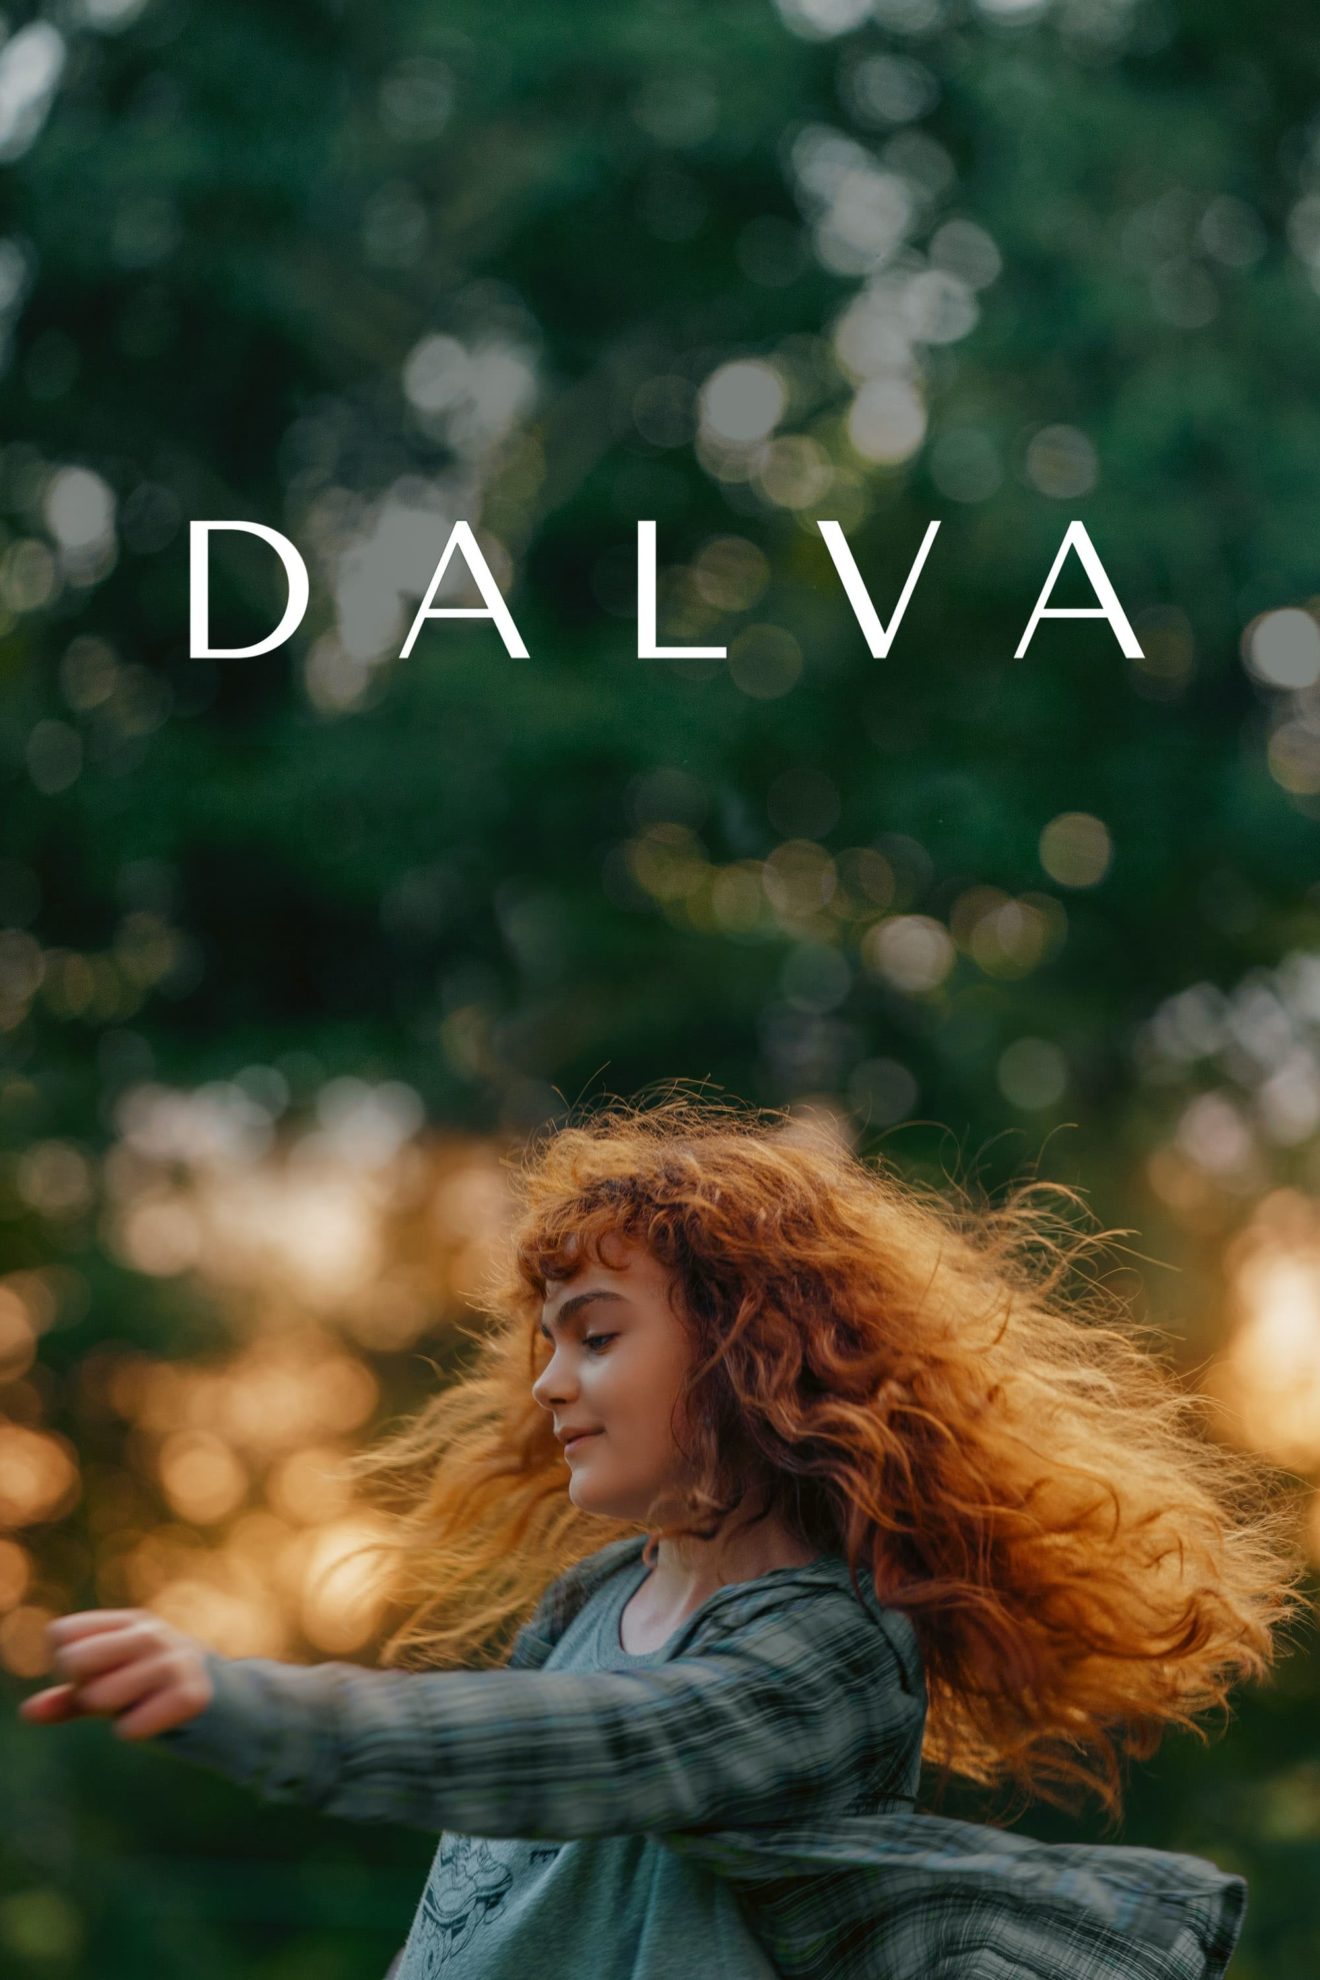 Affiche du film "Dalva"